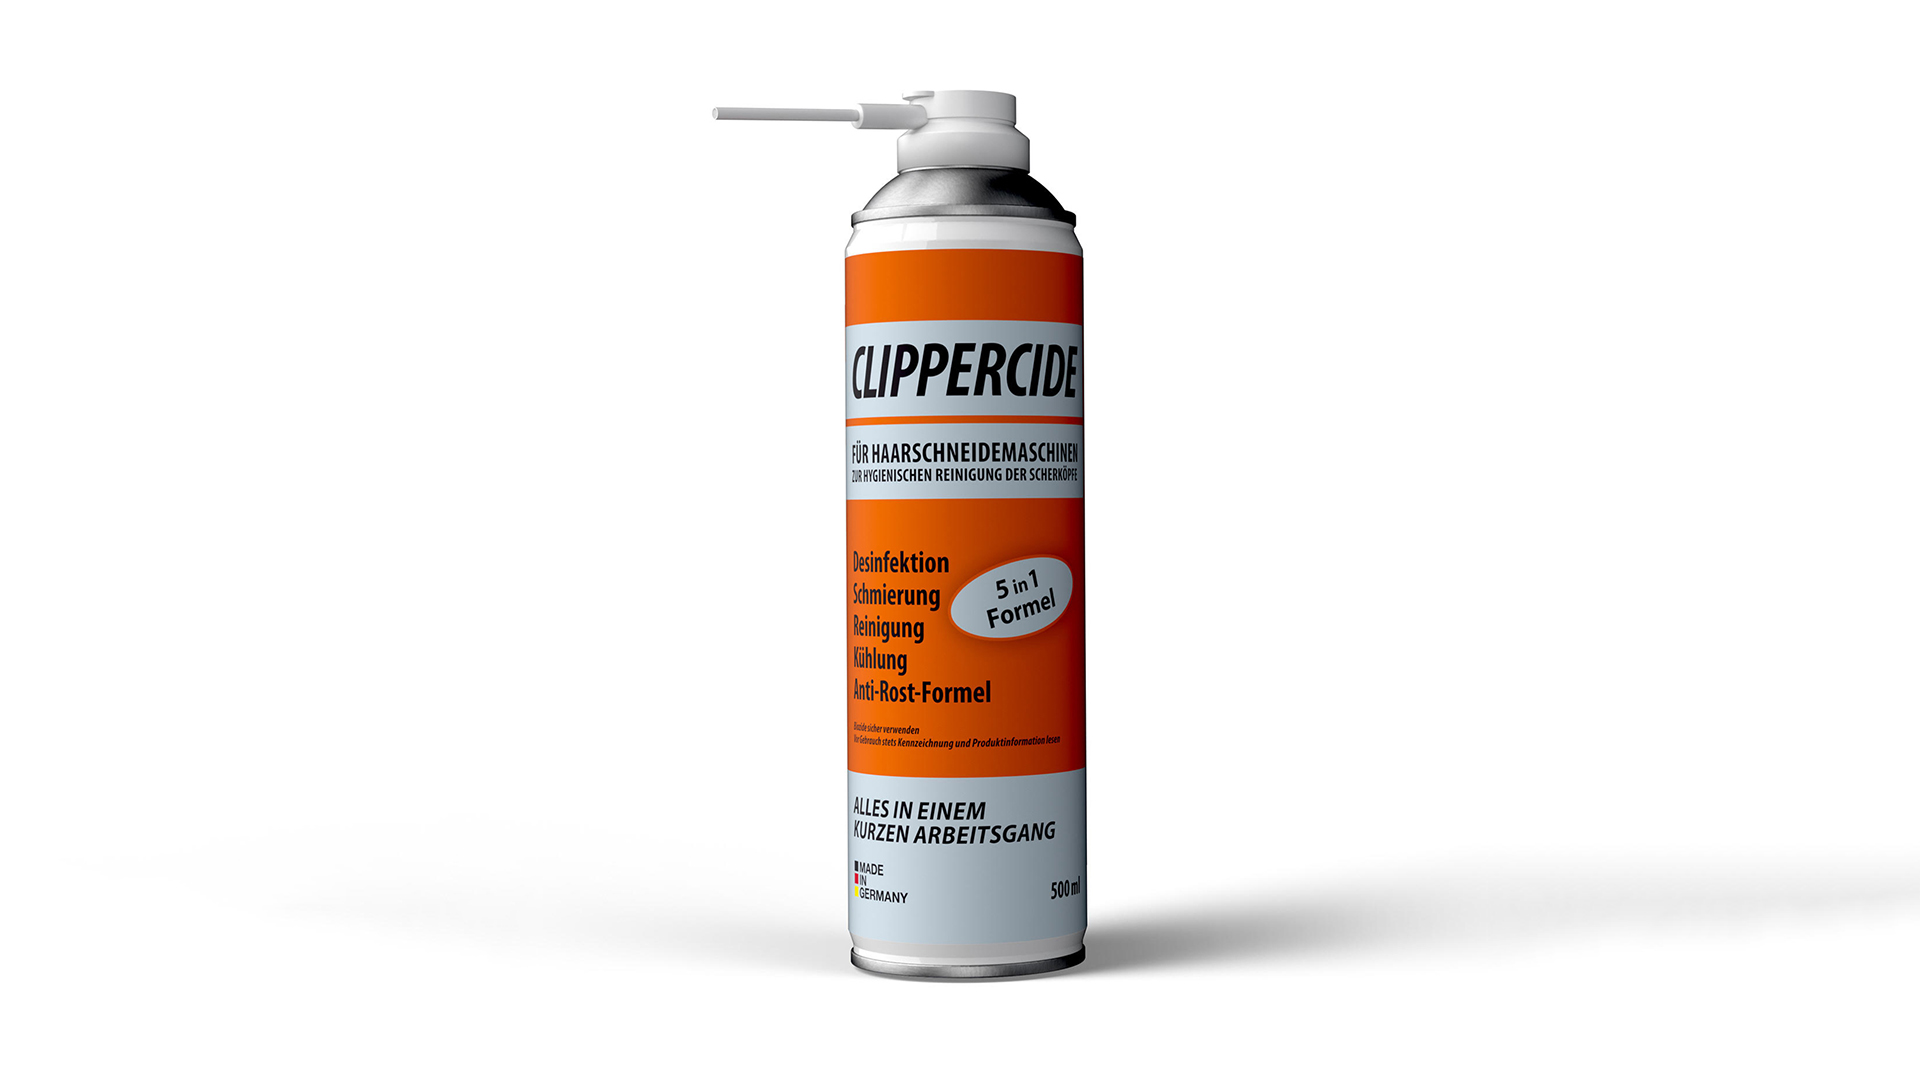 spray clippercide